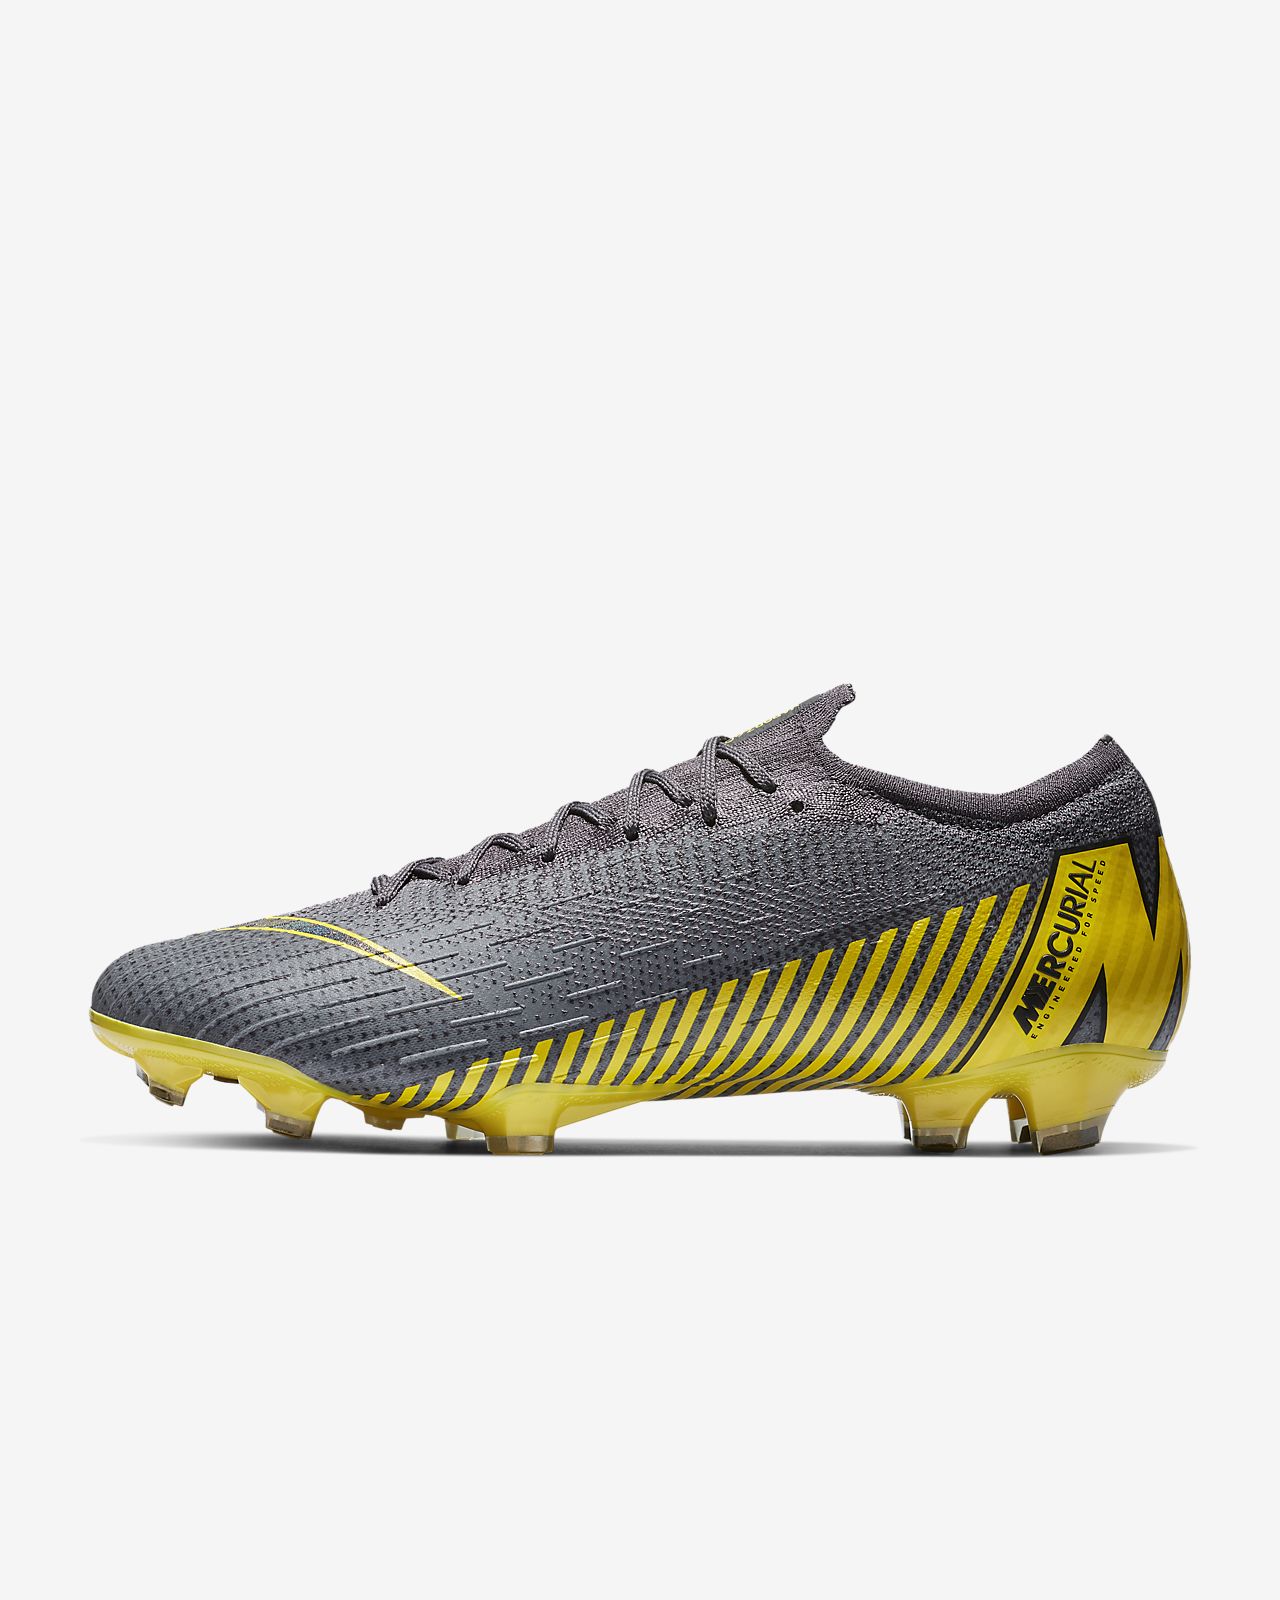 Hot Shop Men's Nike Mercurial Vapor XI Soccer Shoes online